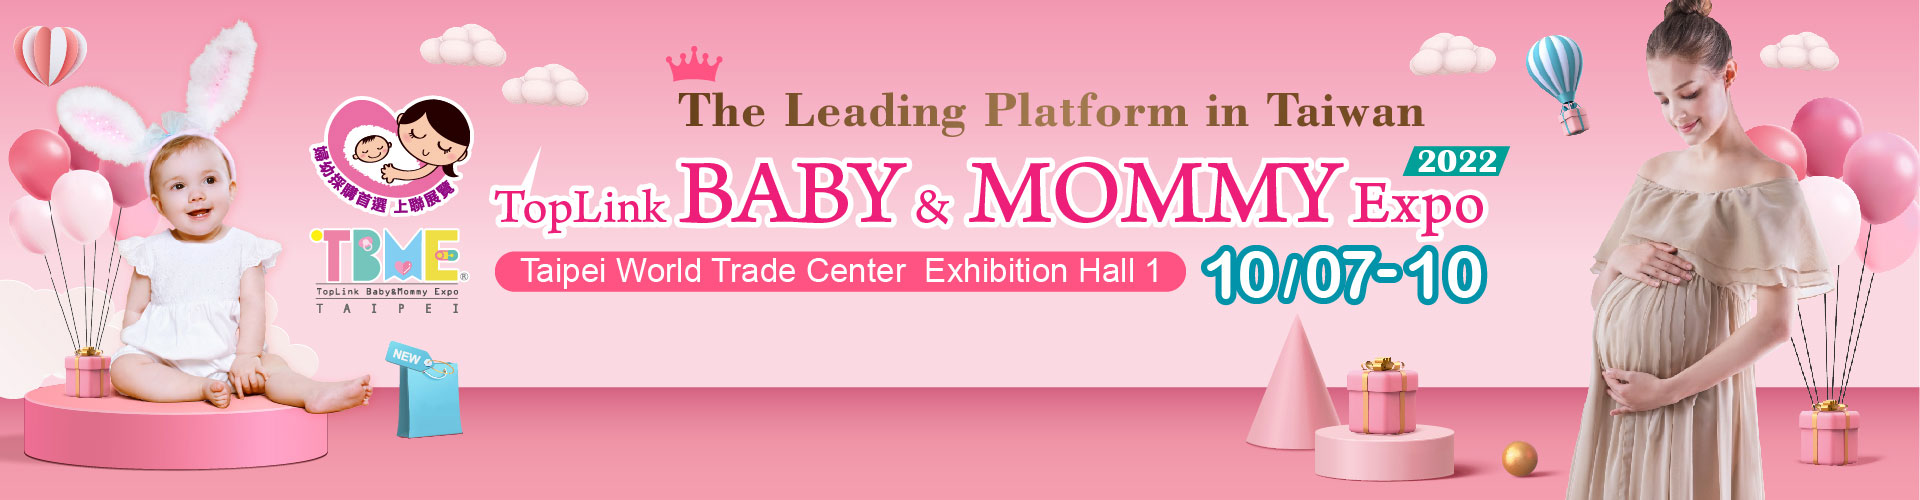 TopLink Baby&Mommy Expo